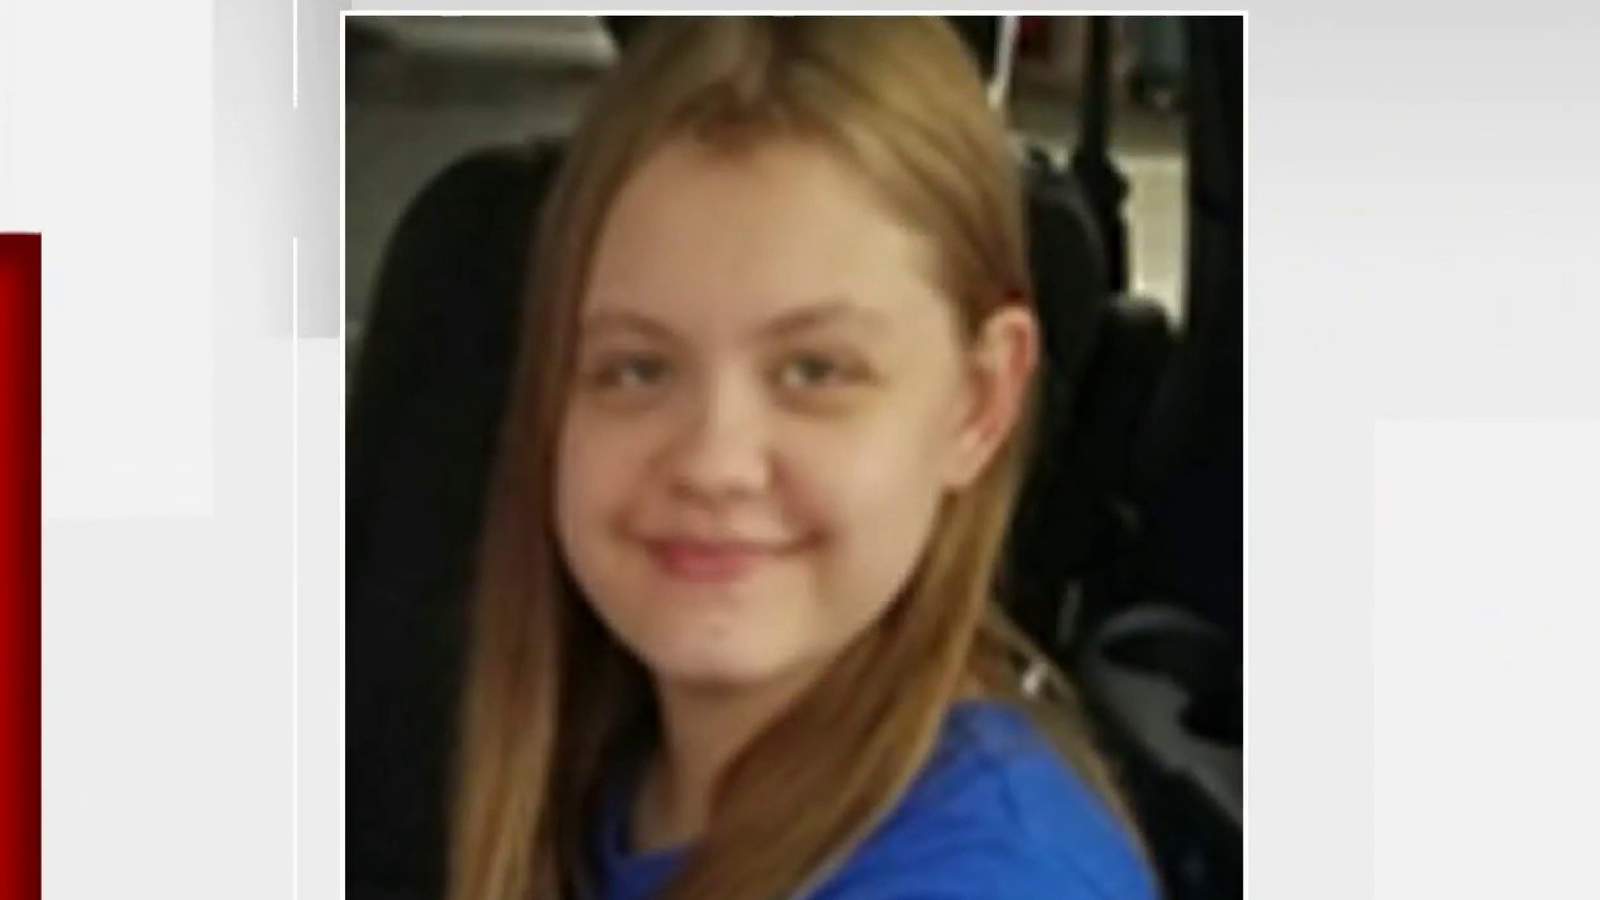 Missing girl found safe in Orlando